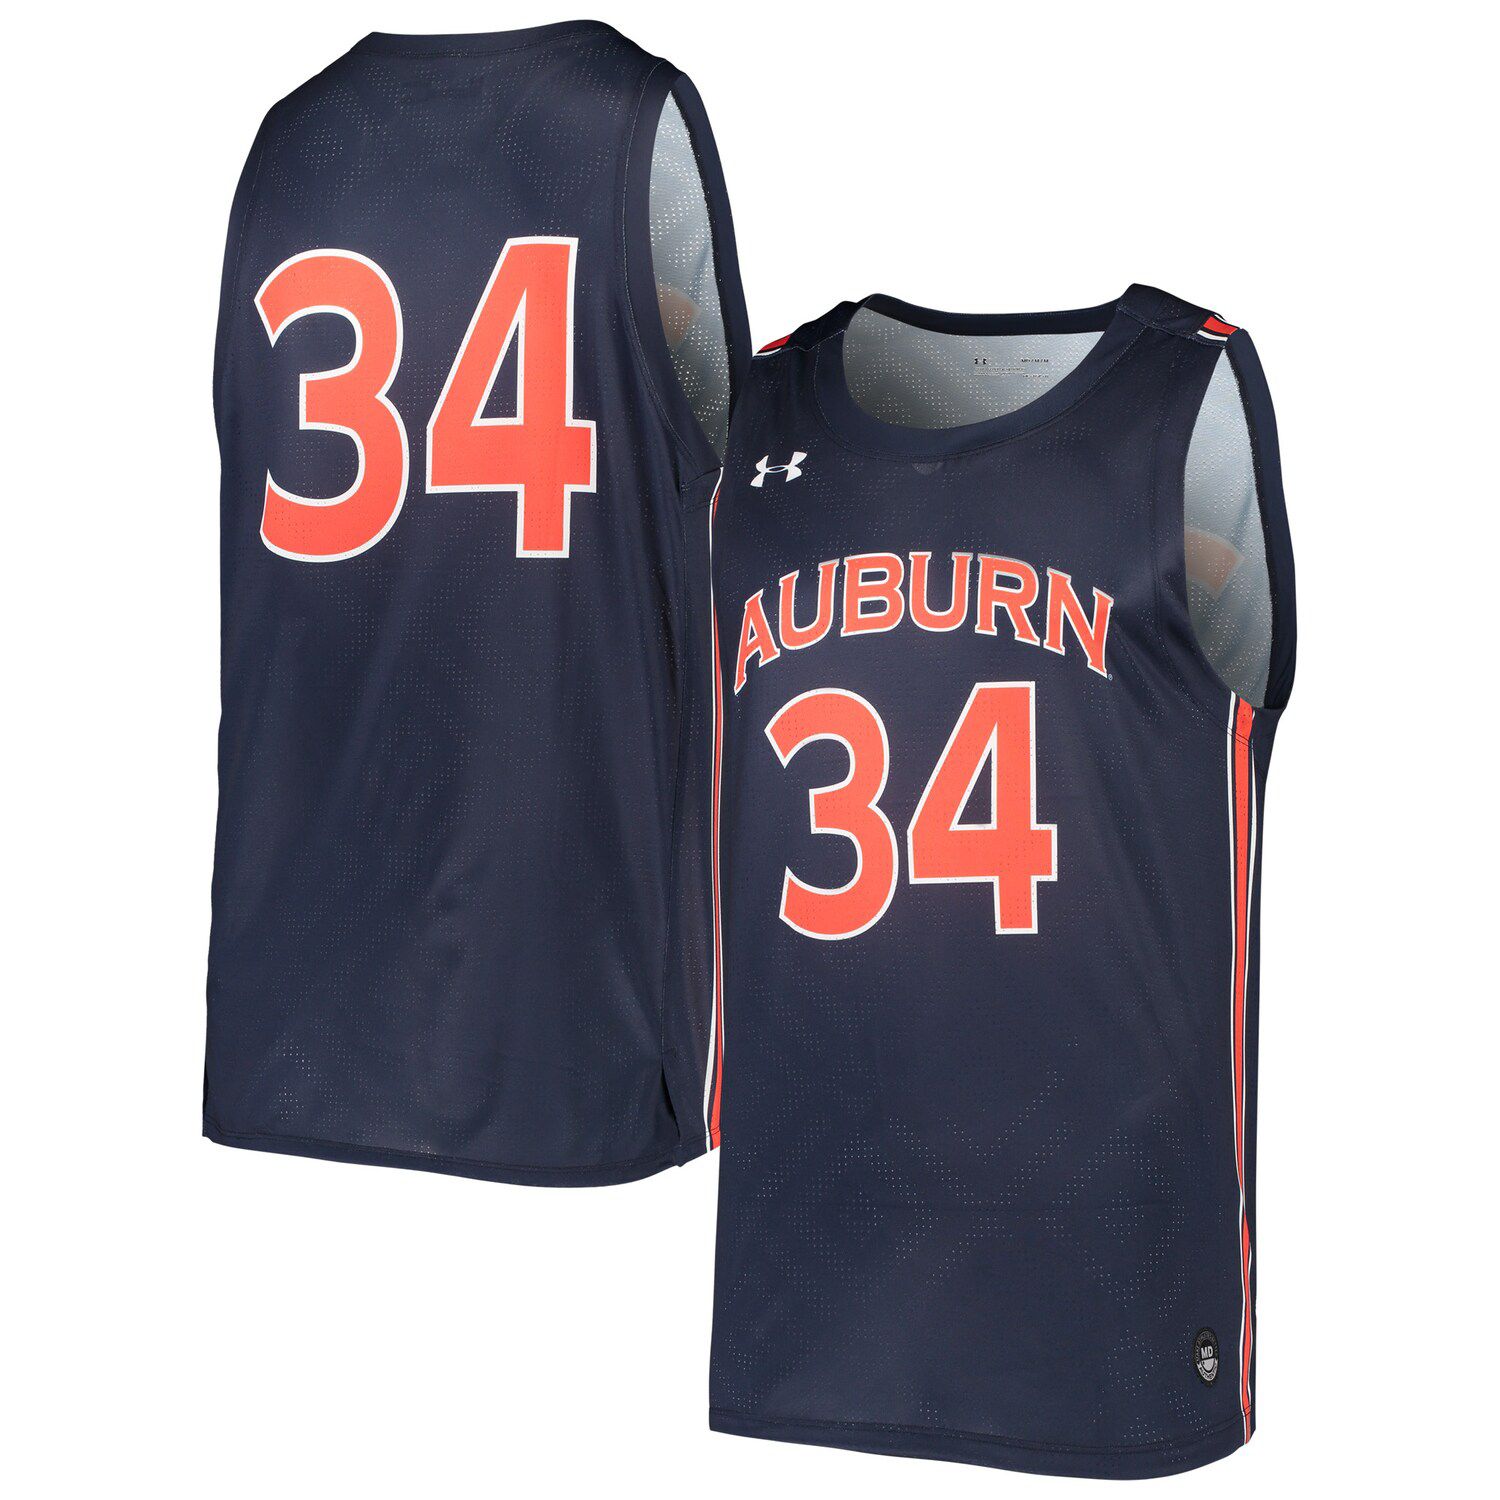 auburn tigers basketball jersey